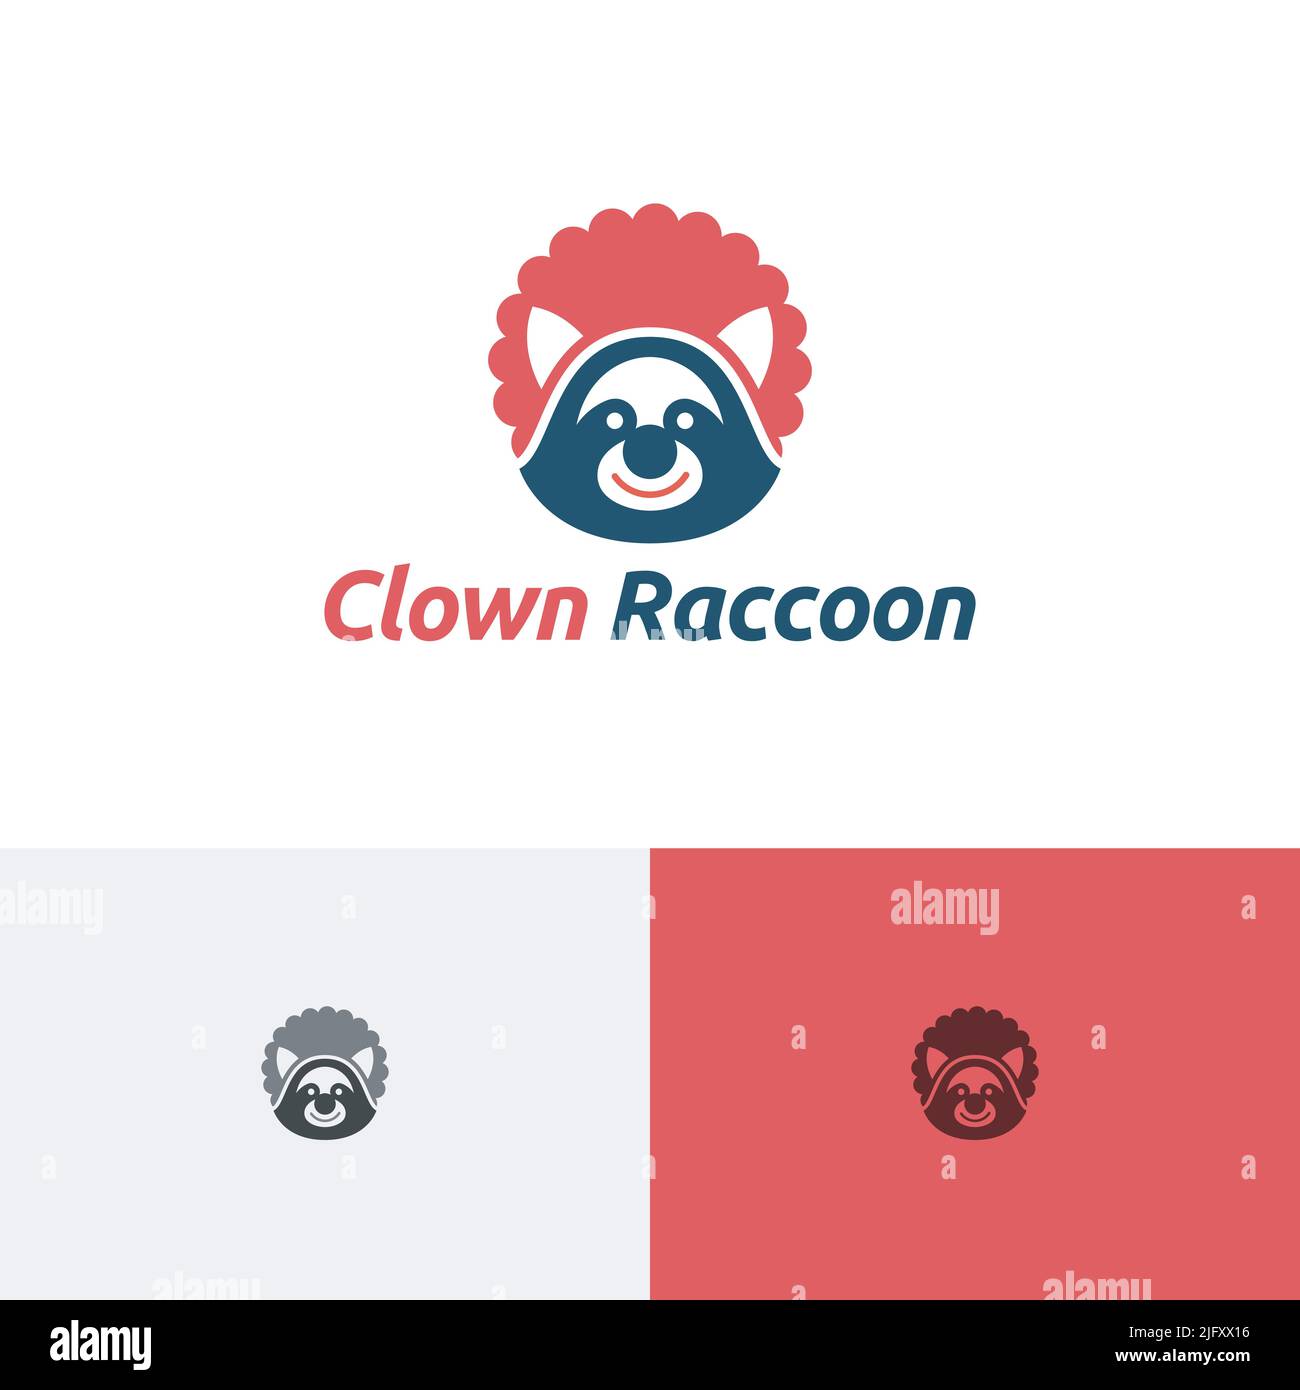 Fun Happy Clown Raccoon Show Animal Zoo Logo Stock Vector